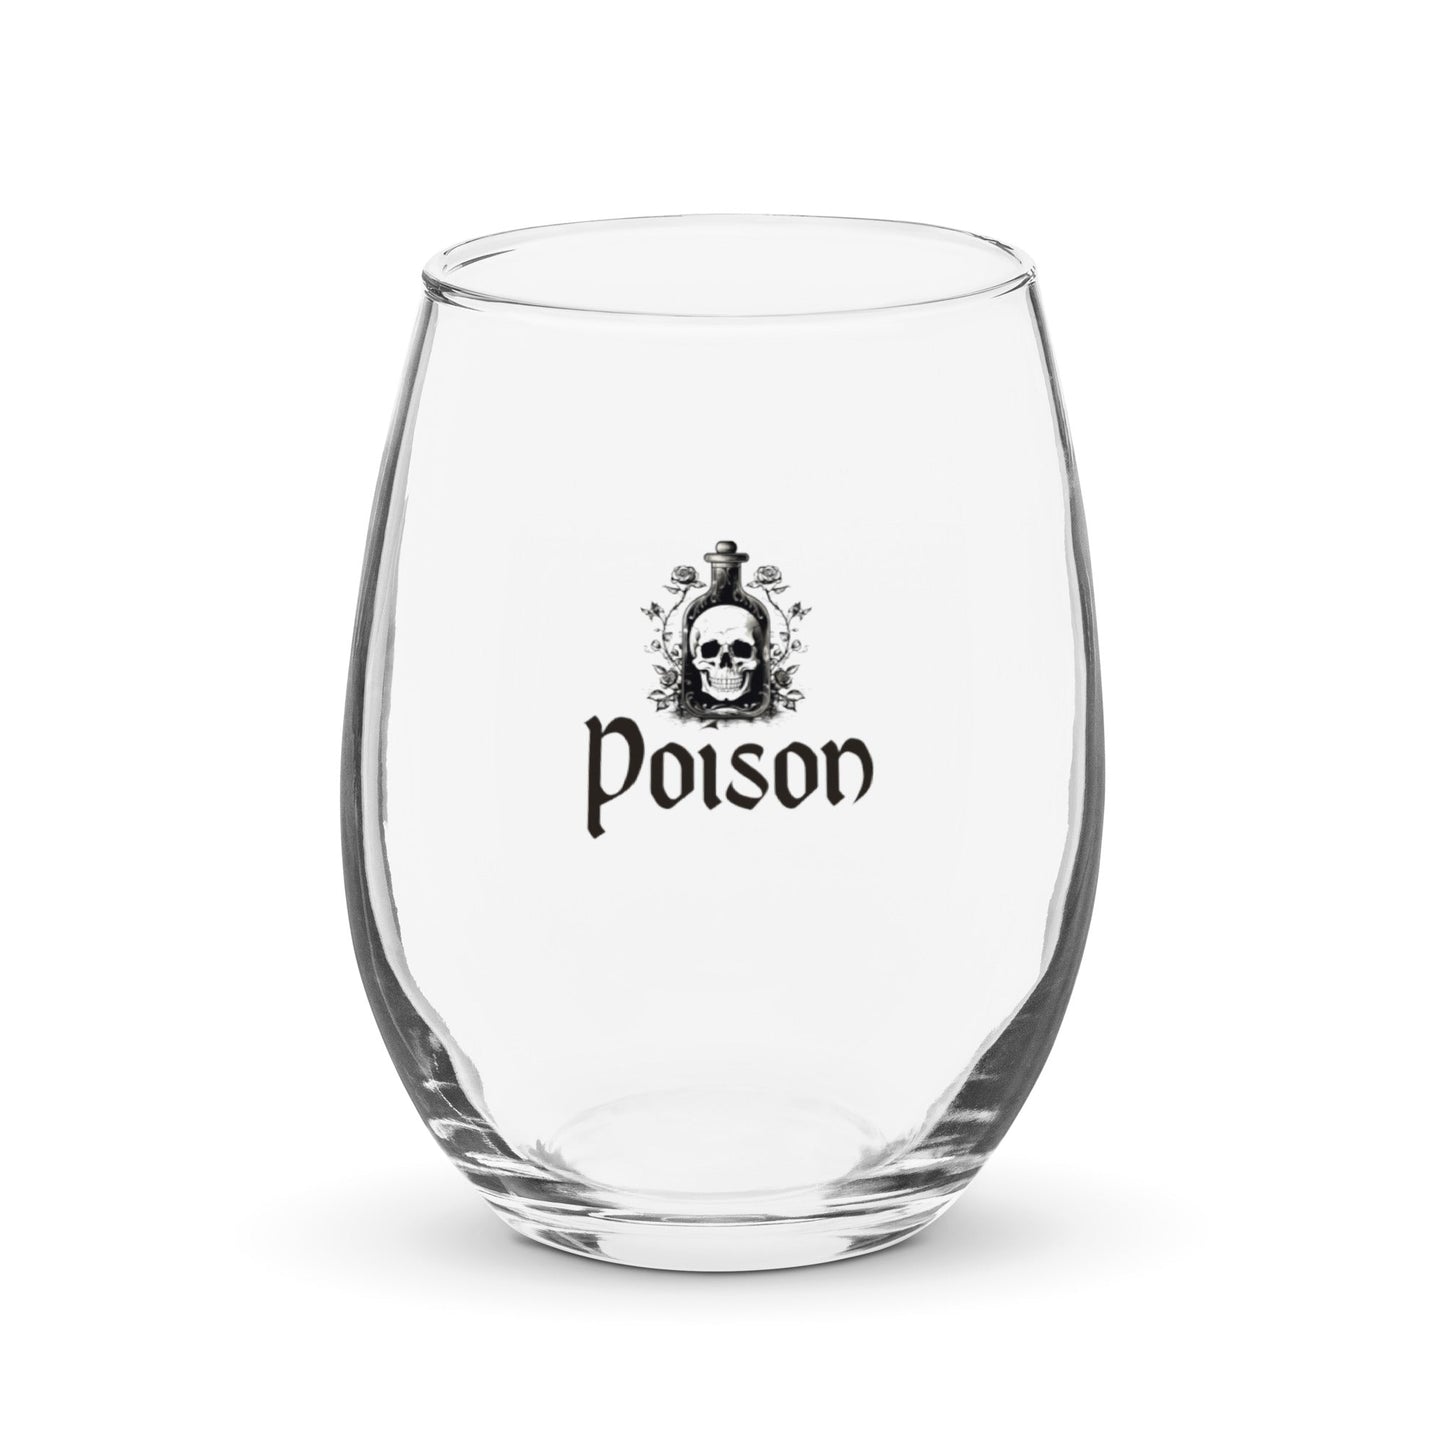 Poison Stemless Wine GlassVTZdesignscupglassgothic